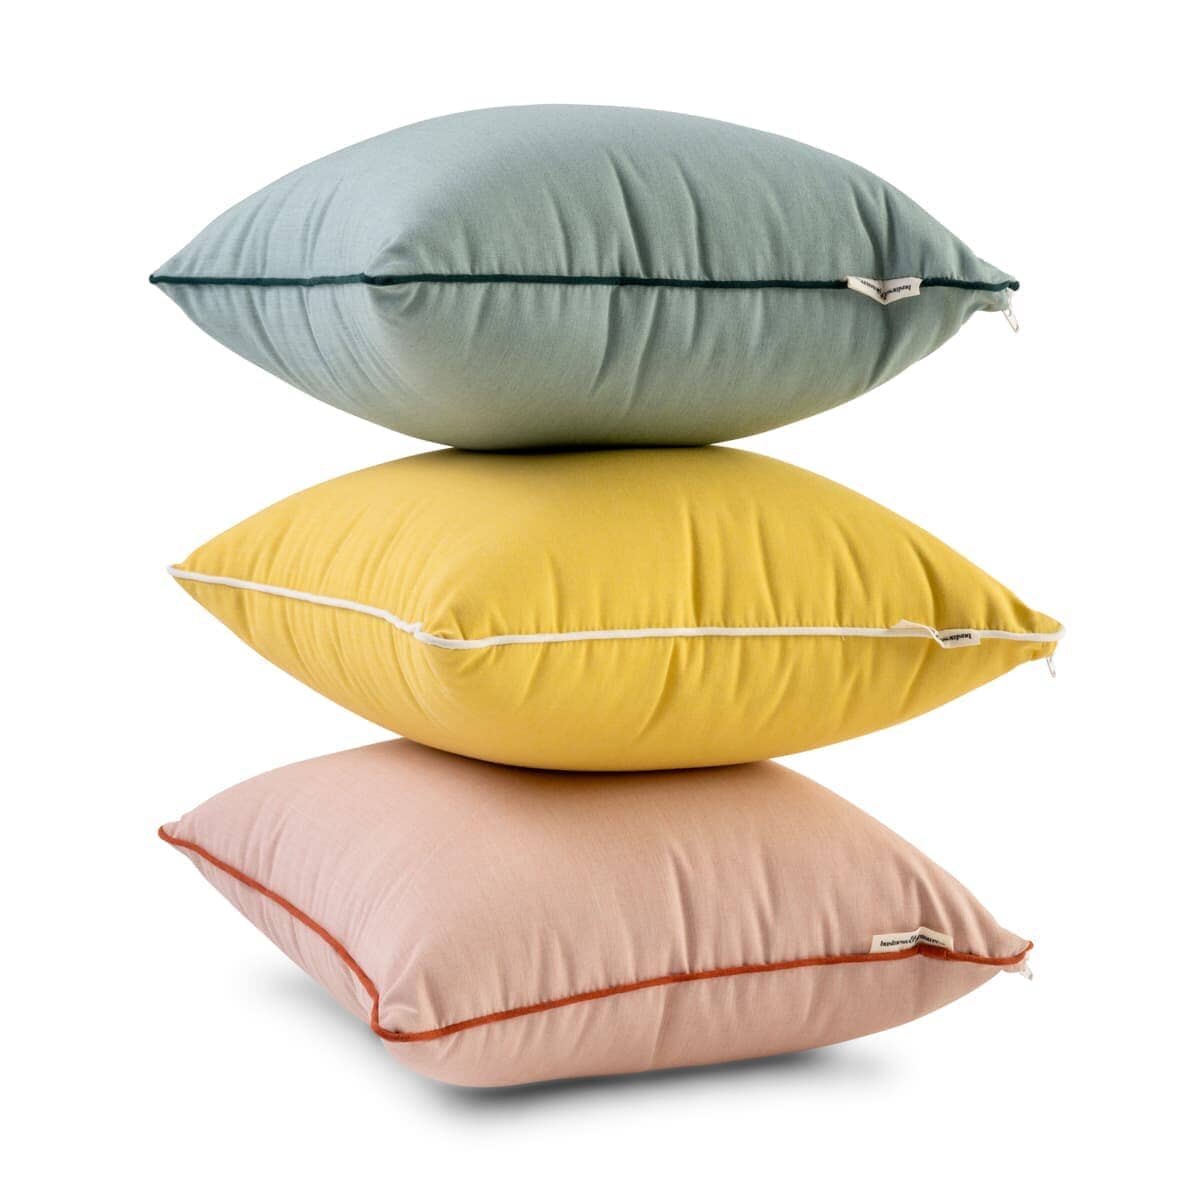 Studio image of riviera throw pillows